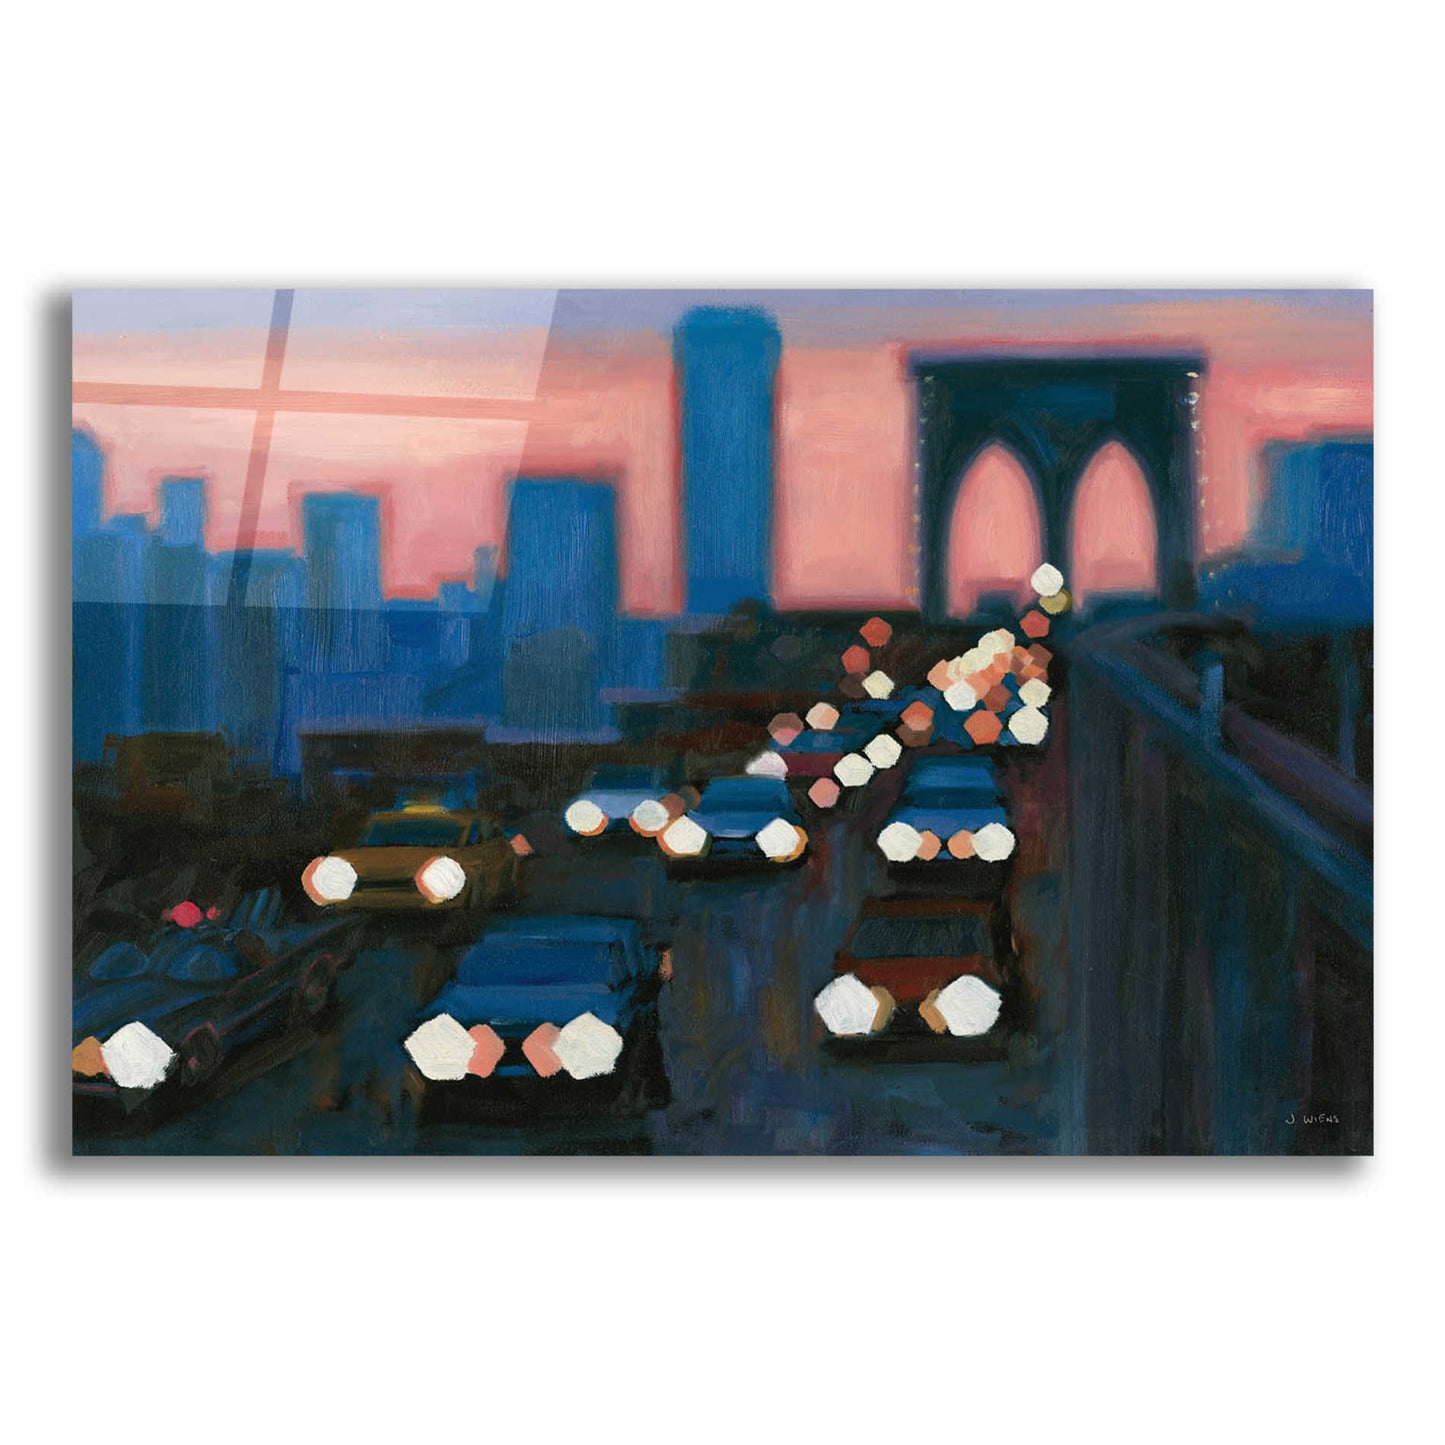 Epic Art 'Brooklyn Bridge Evening' by James Wiens, Acrylic Glass Wall Art,18x12x1.1x0,26x18x1.1x0,40x26x1.74x0,60x40x1.74x0